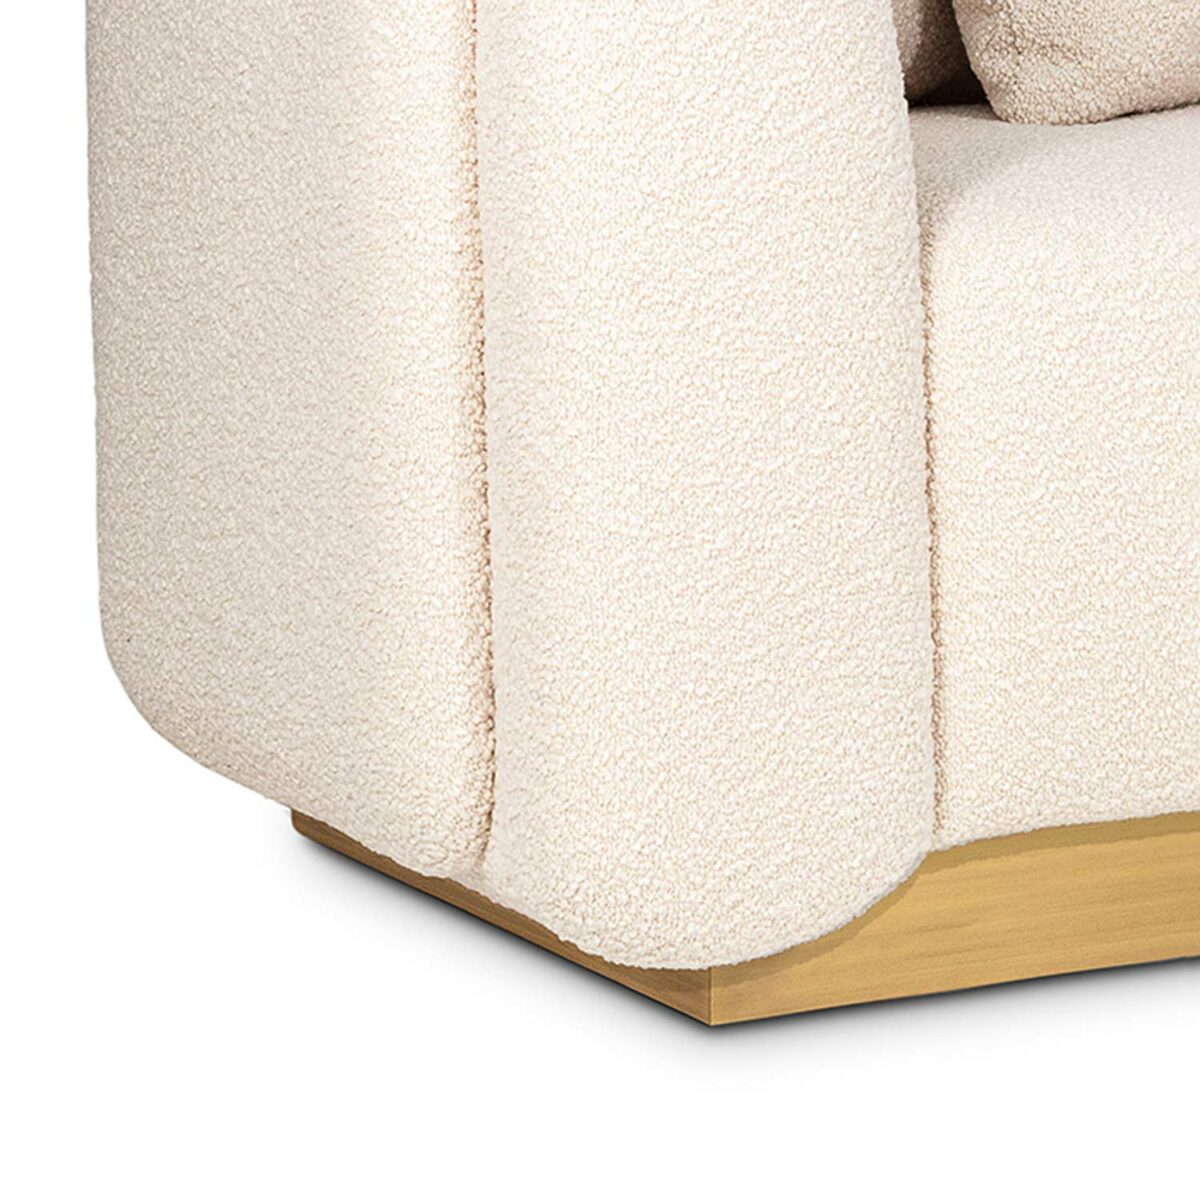 FOZ 3-Sitzer-Sofa Wolle creme